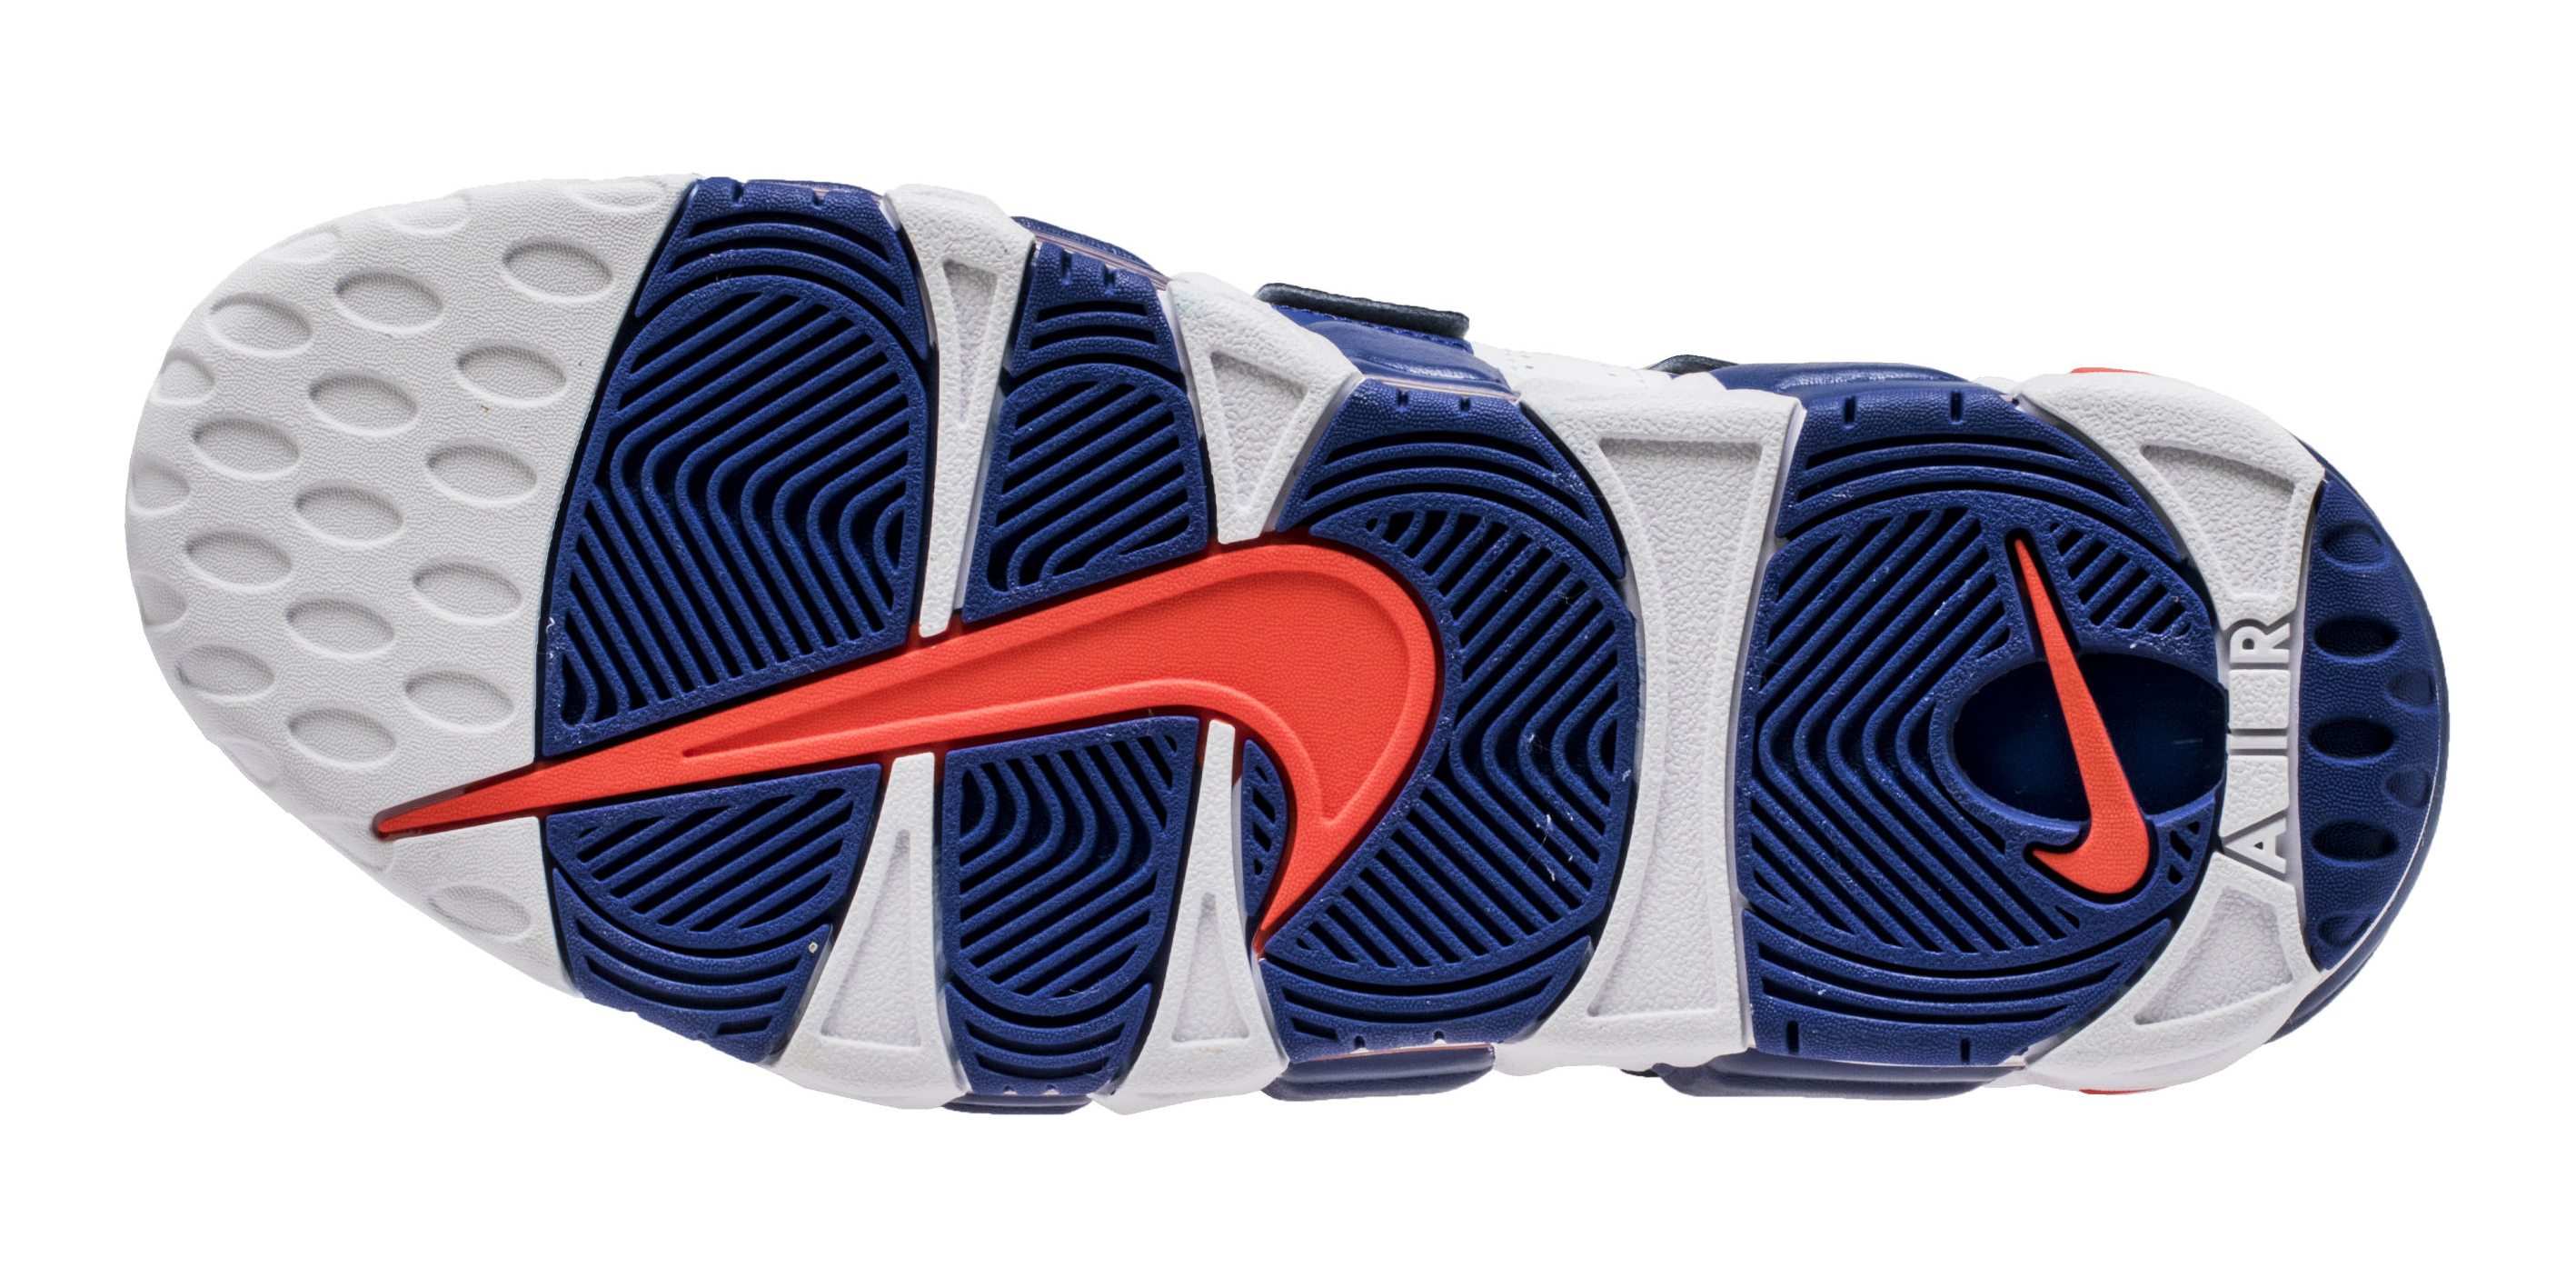 Nike Air More Uptempo "Knicks"